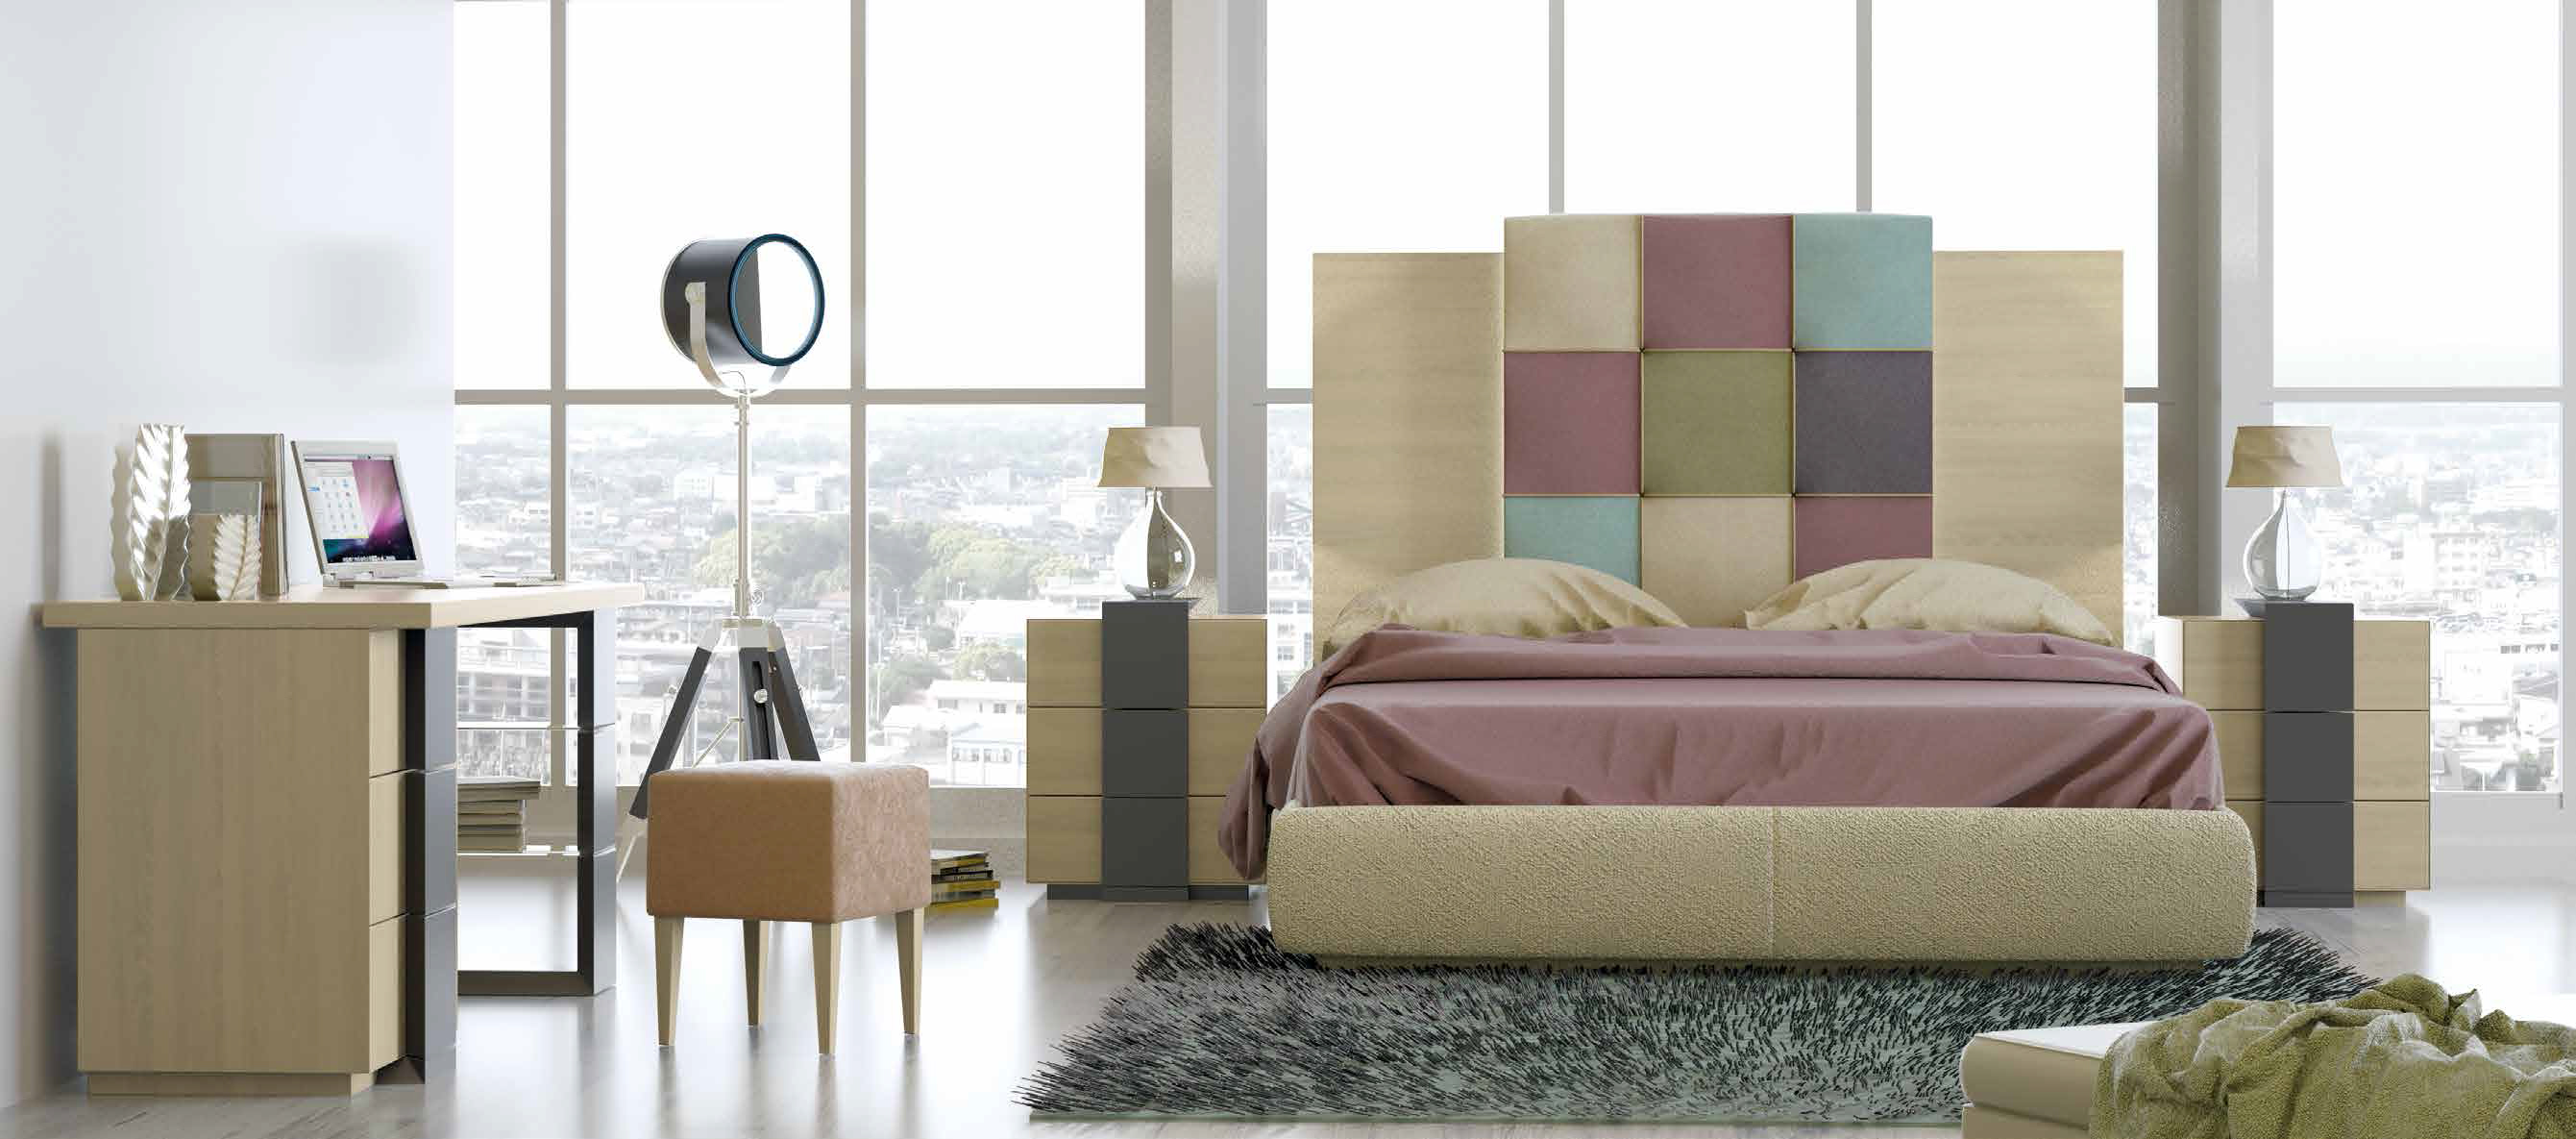 Brands Franco Furniture Bedrooms vol3, Spain DOR 12